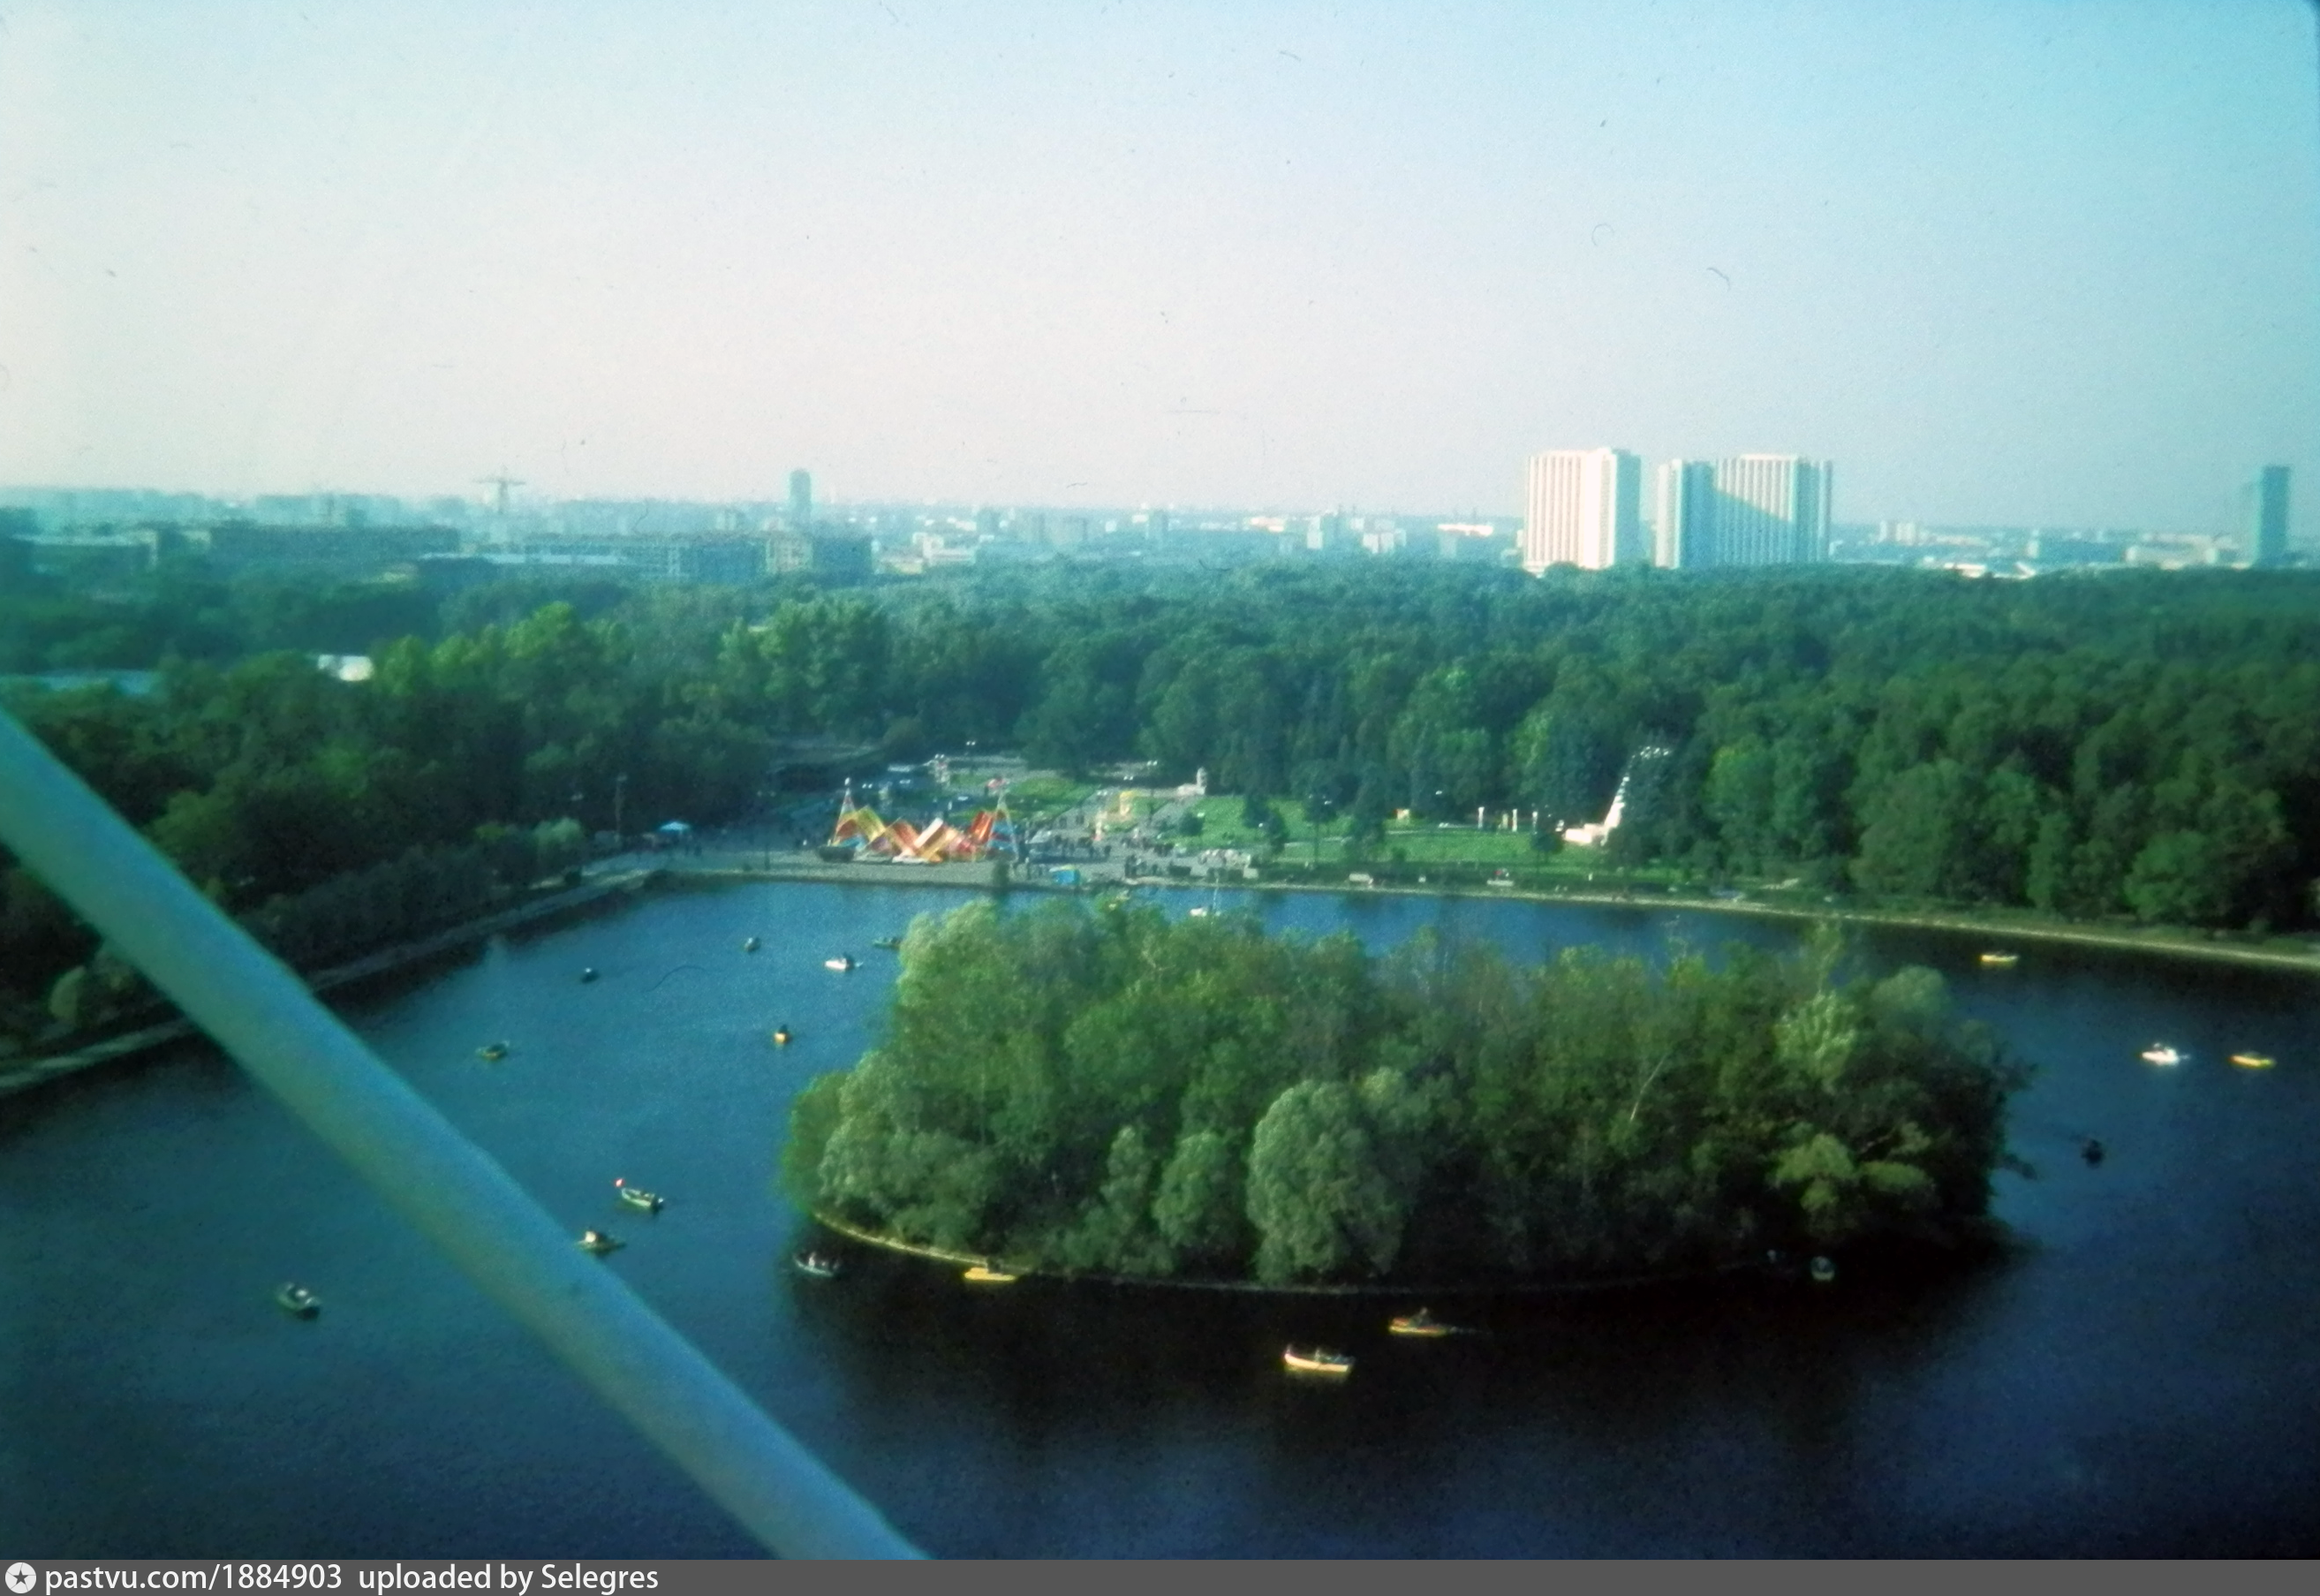 Измайловский парк московский просп 2 москва фото. Парк Измайлово колесо обозрения вид с воды.